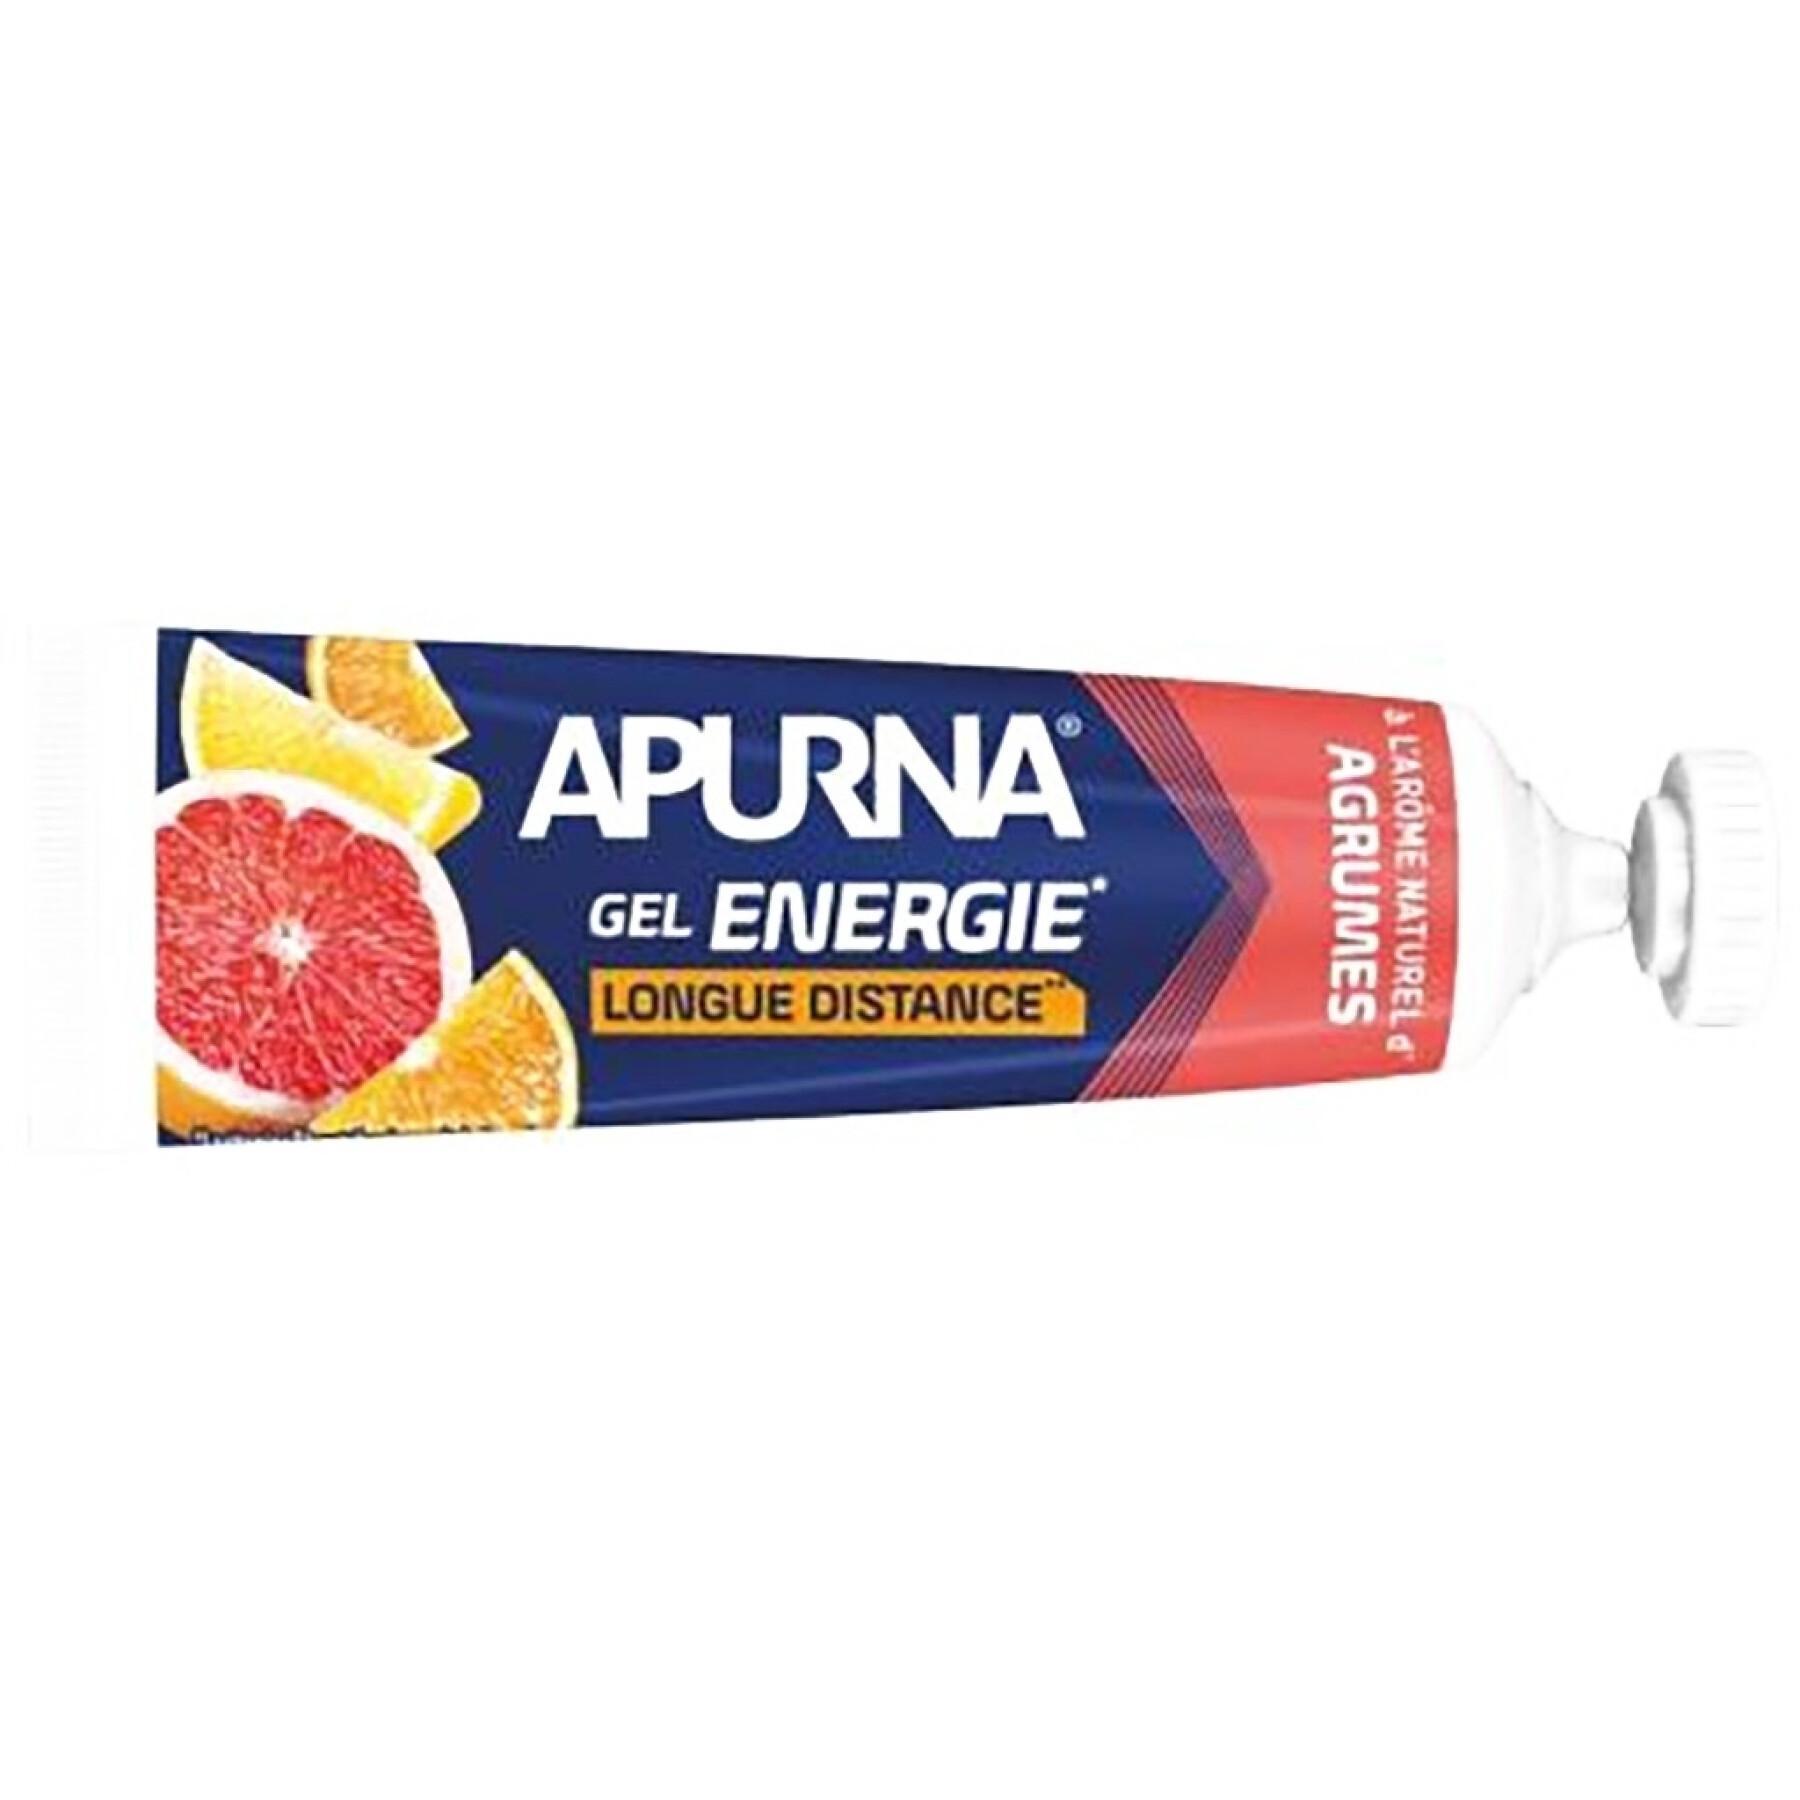 Pack of 5 long-distance citrus energy gels +2h of effort, including 1 free gel Apurna